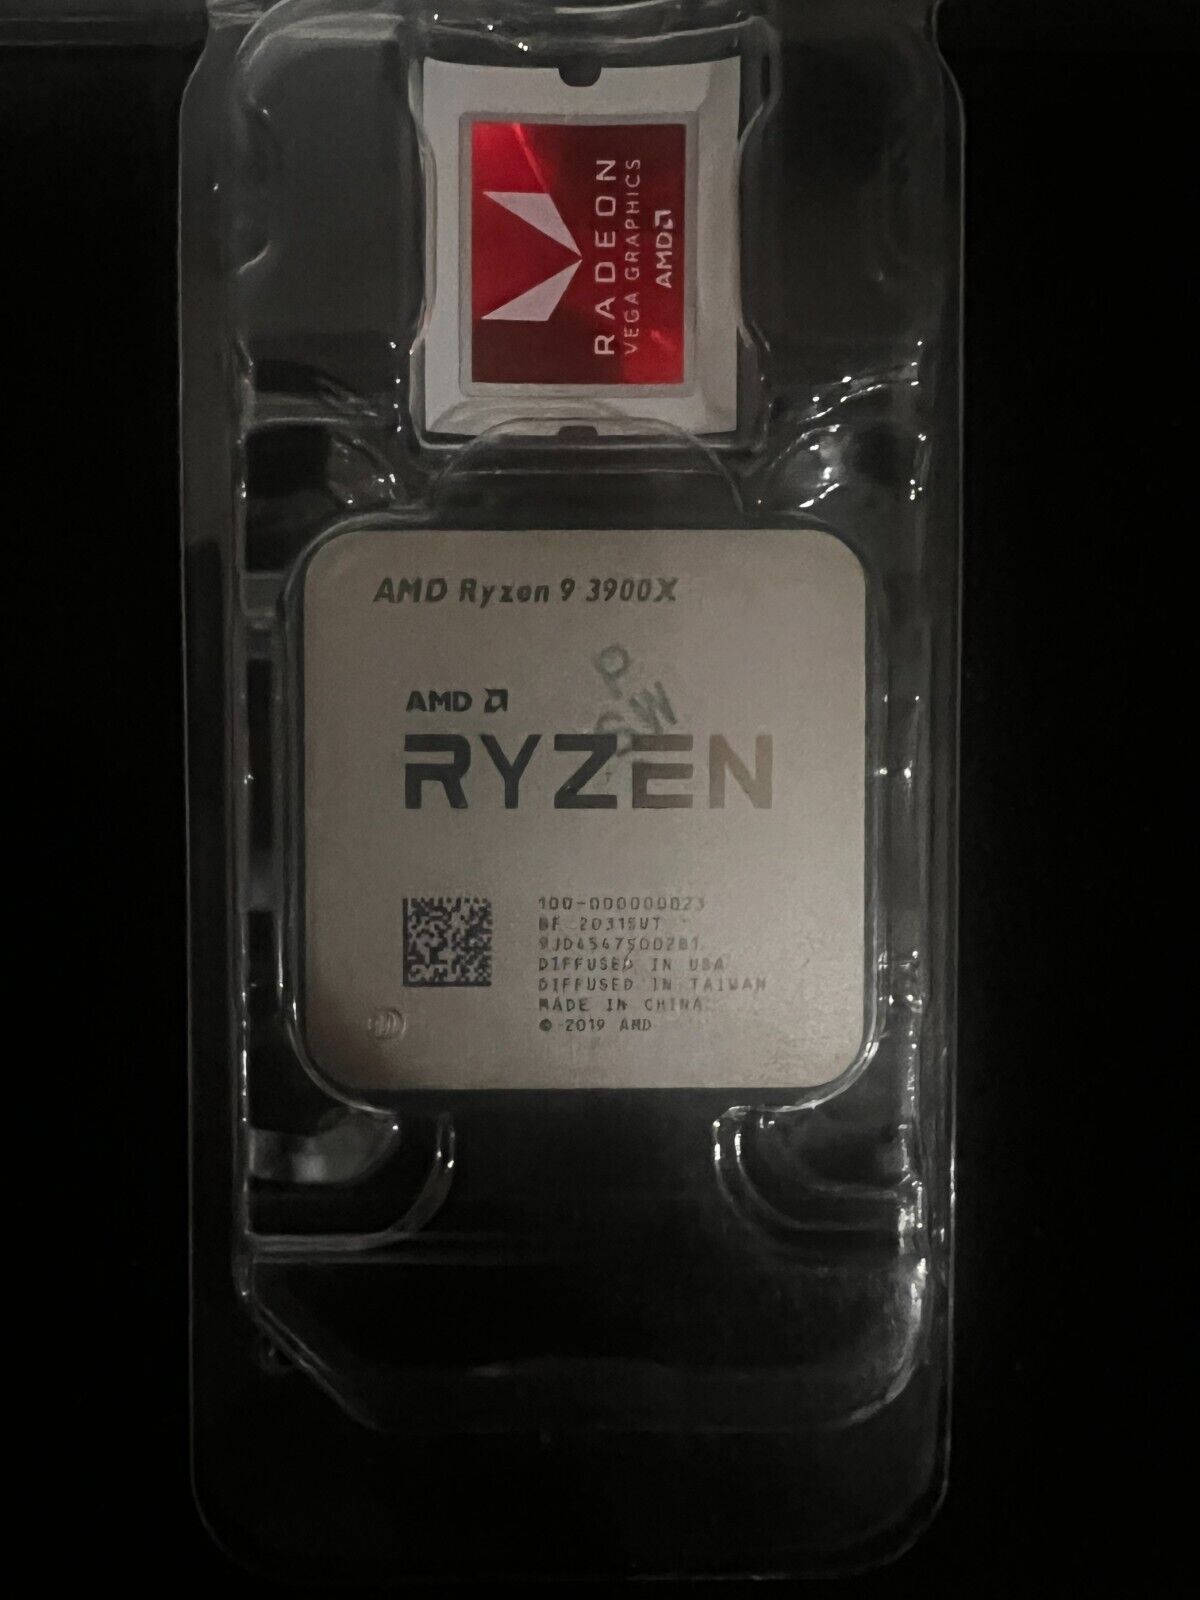 Ryzen 9 3900X *BRAND NEW* (OPEN BOX) - 12 Cores 24 Threads AMD AM4 Processor